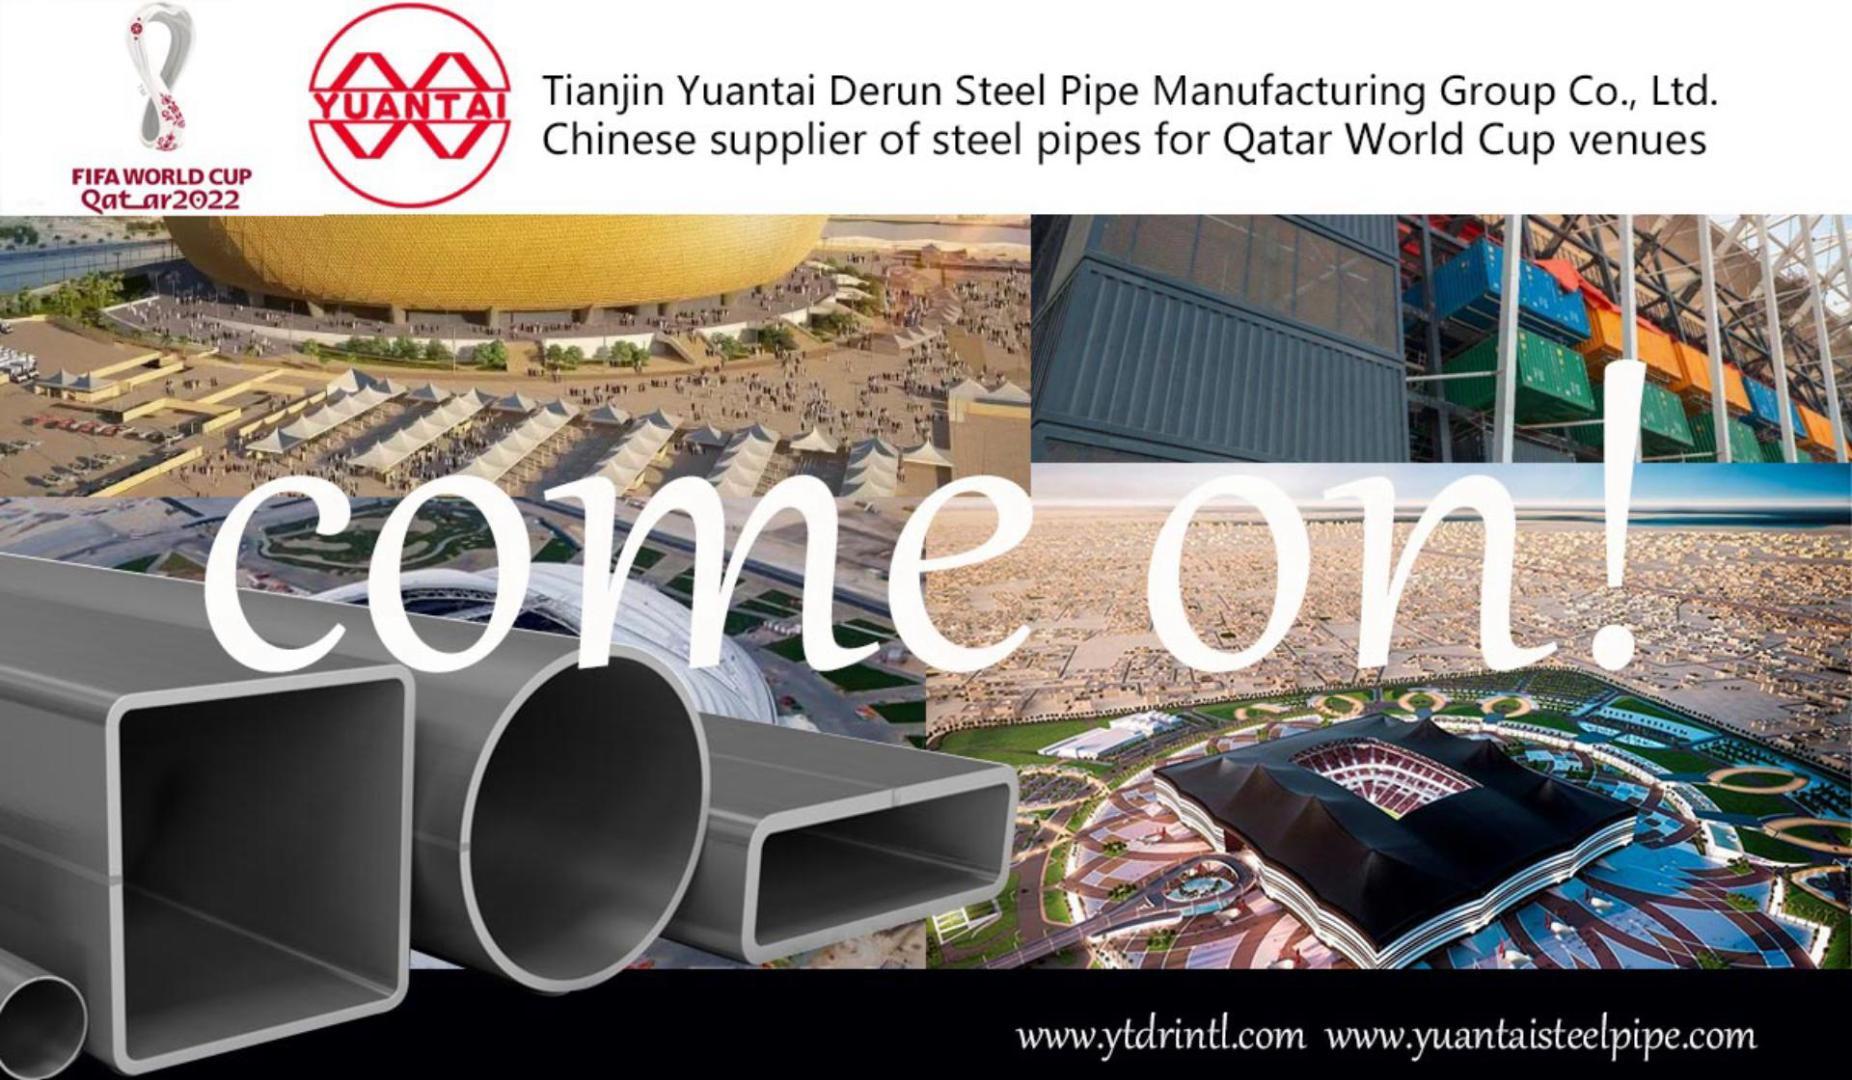 Qatar World Cup Venues project-Tianjin Yuantai Derun Steel Pipe Group